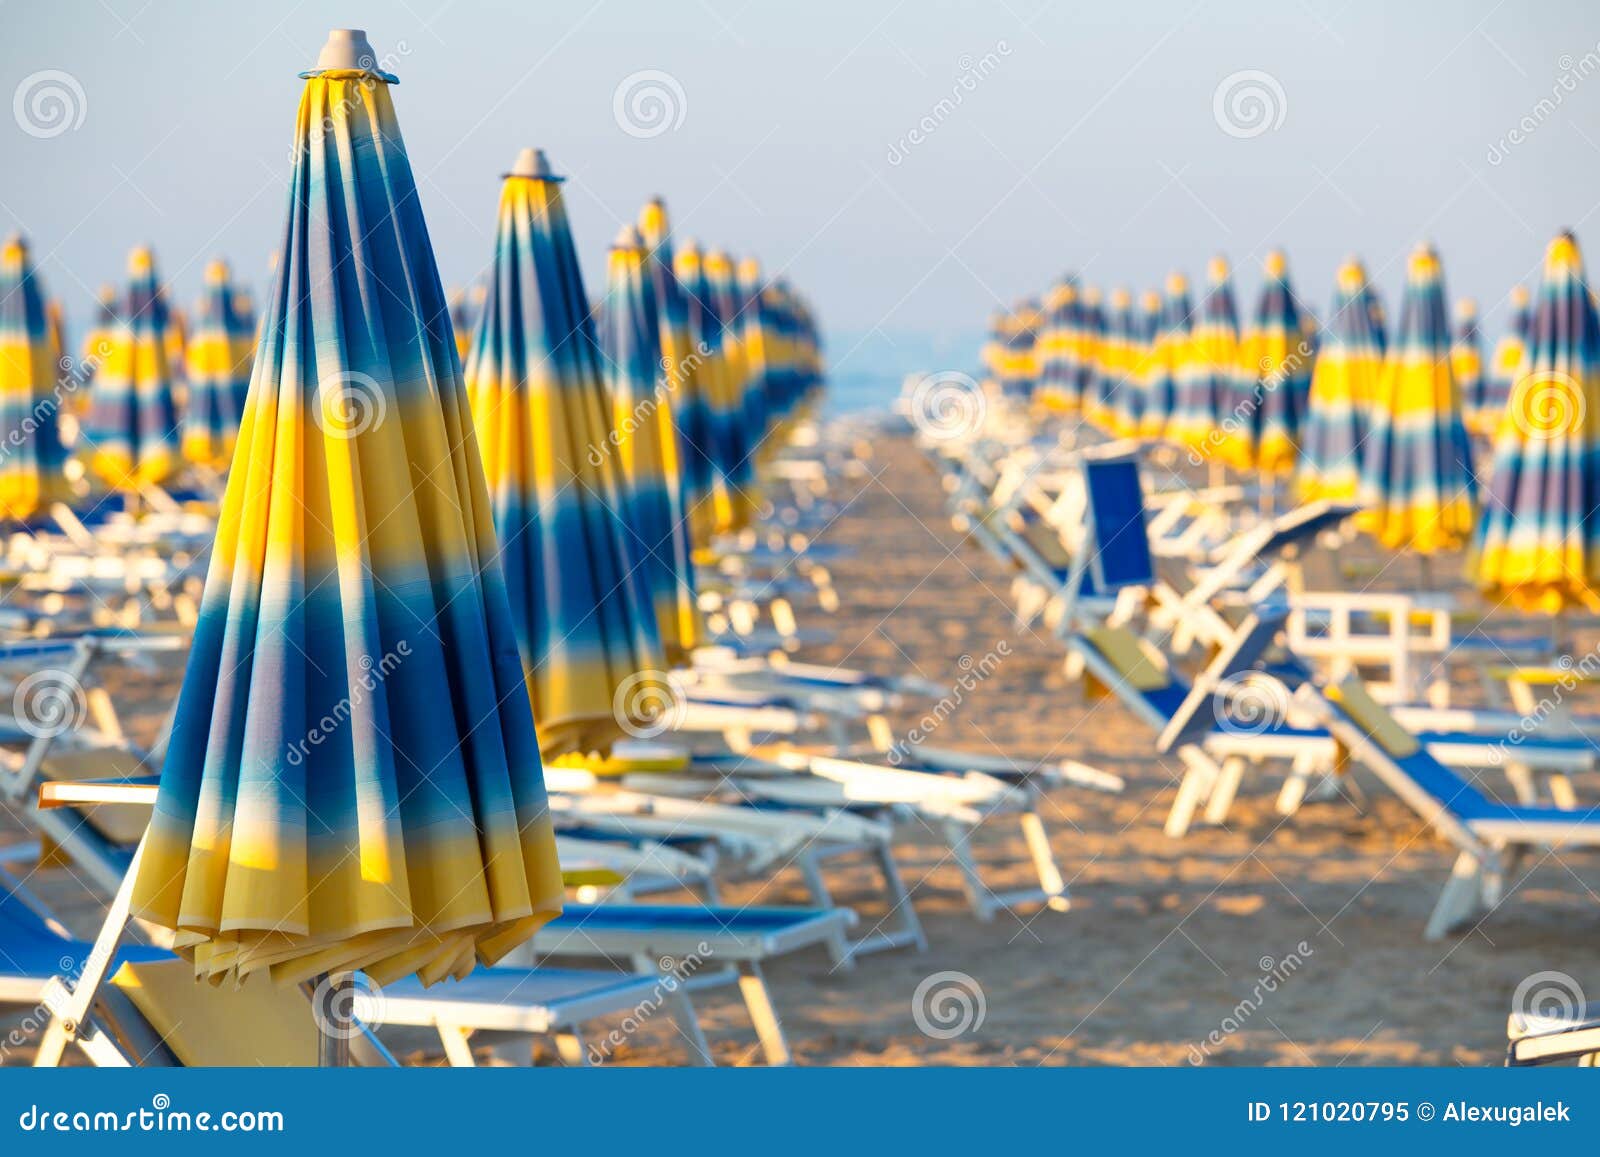 Blue and Yellow Umbrellas on Beach Stock Image - Image of sunny, beach ...